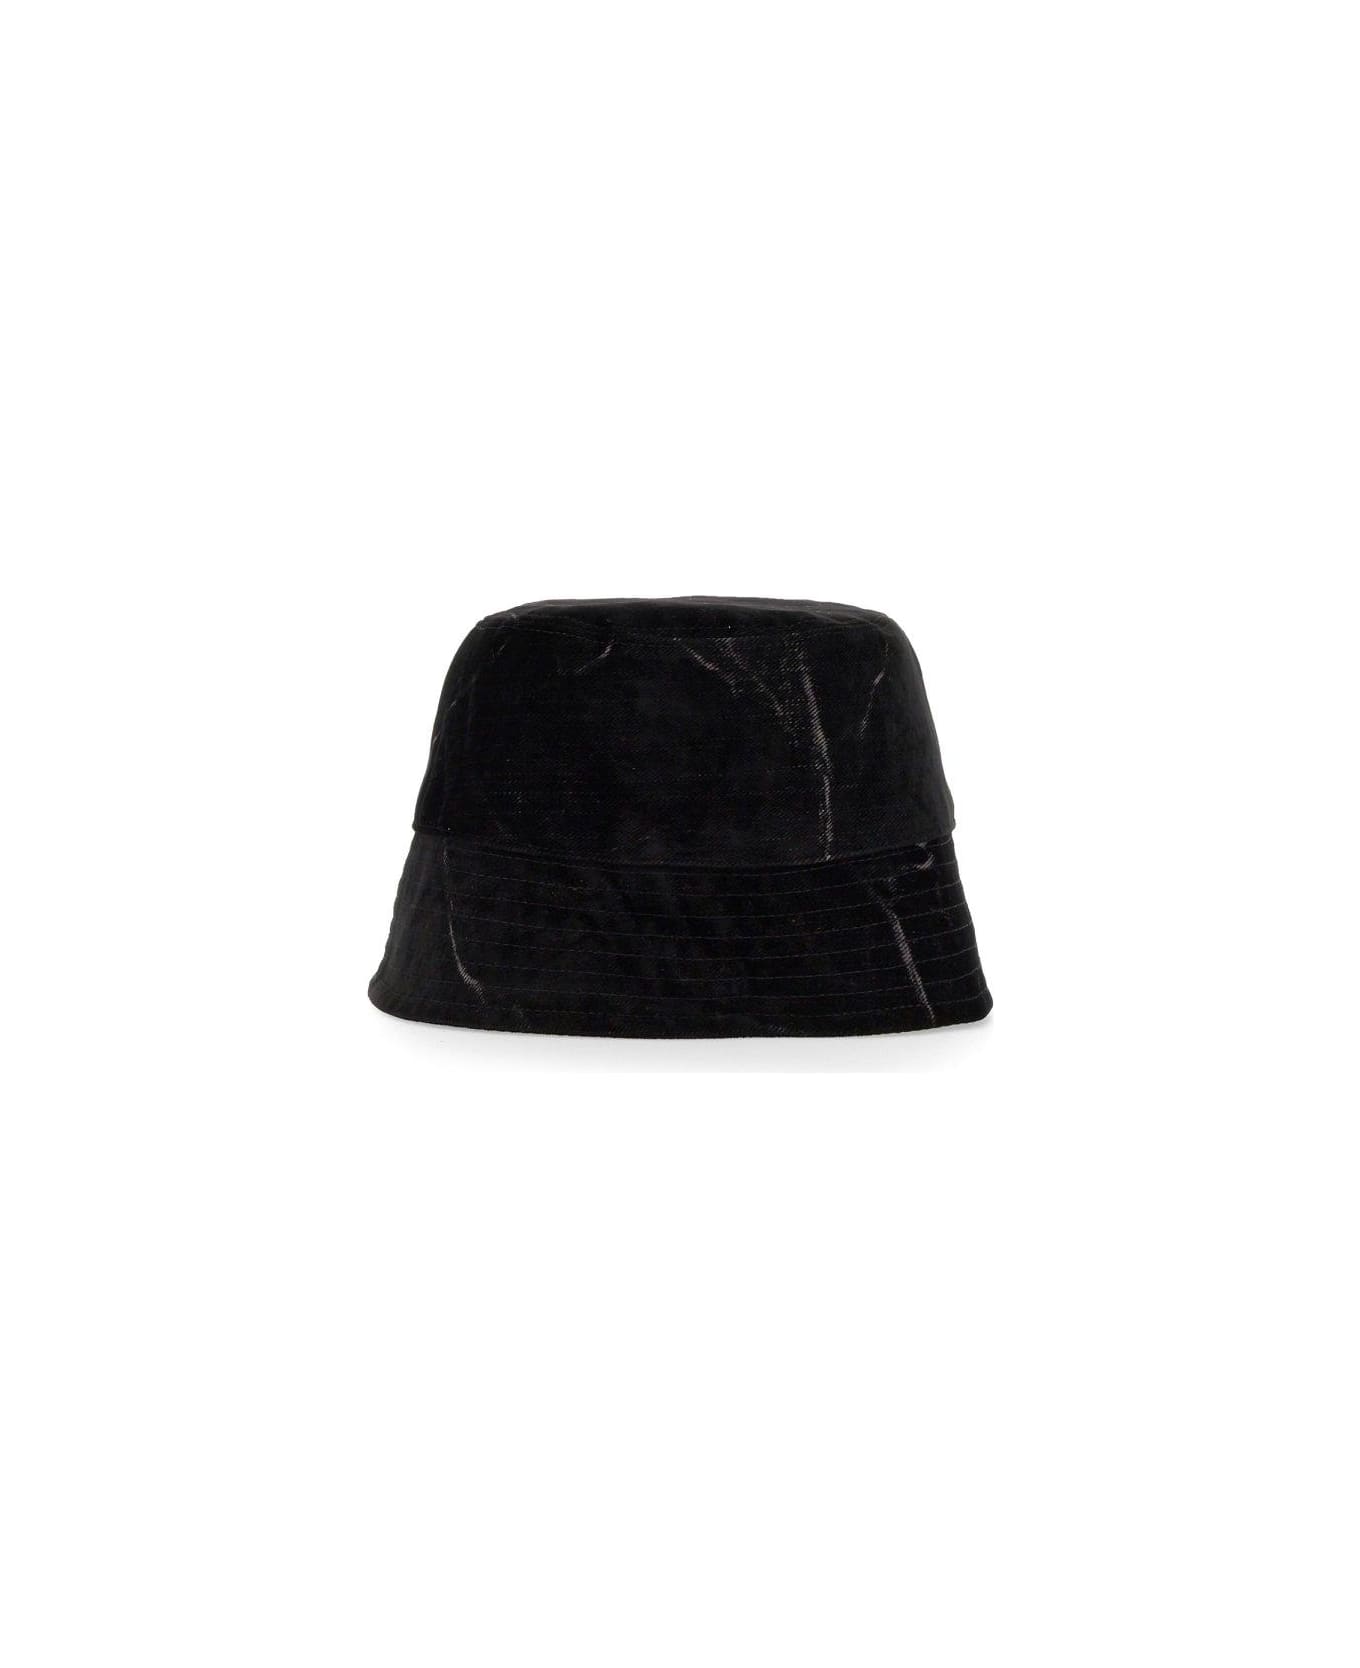 Stella McCartney Logo Embroidered Bucket Hat - Black